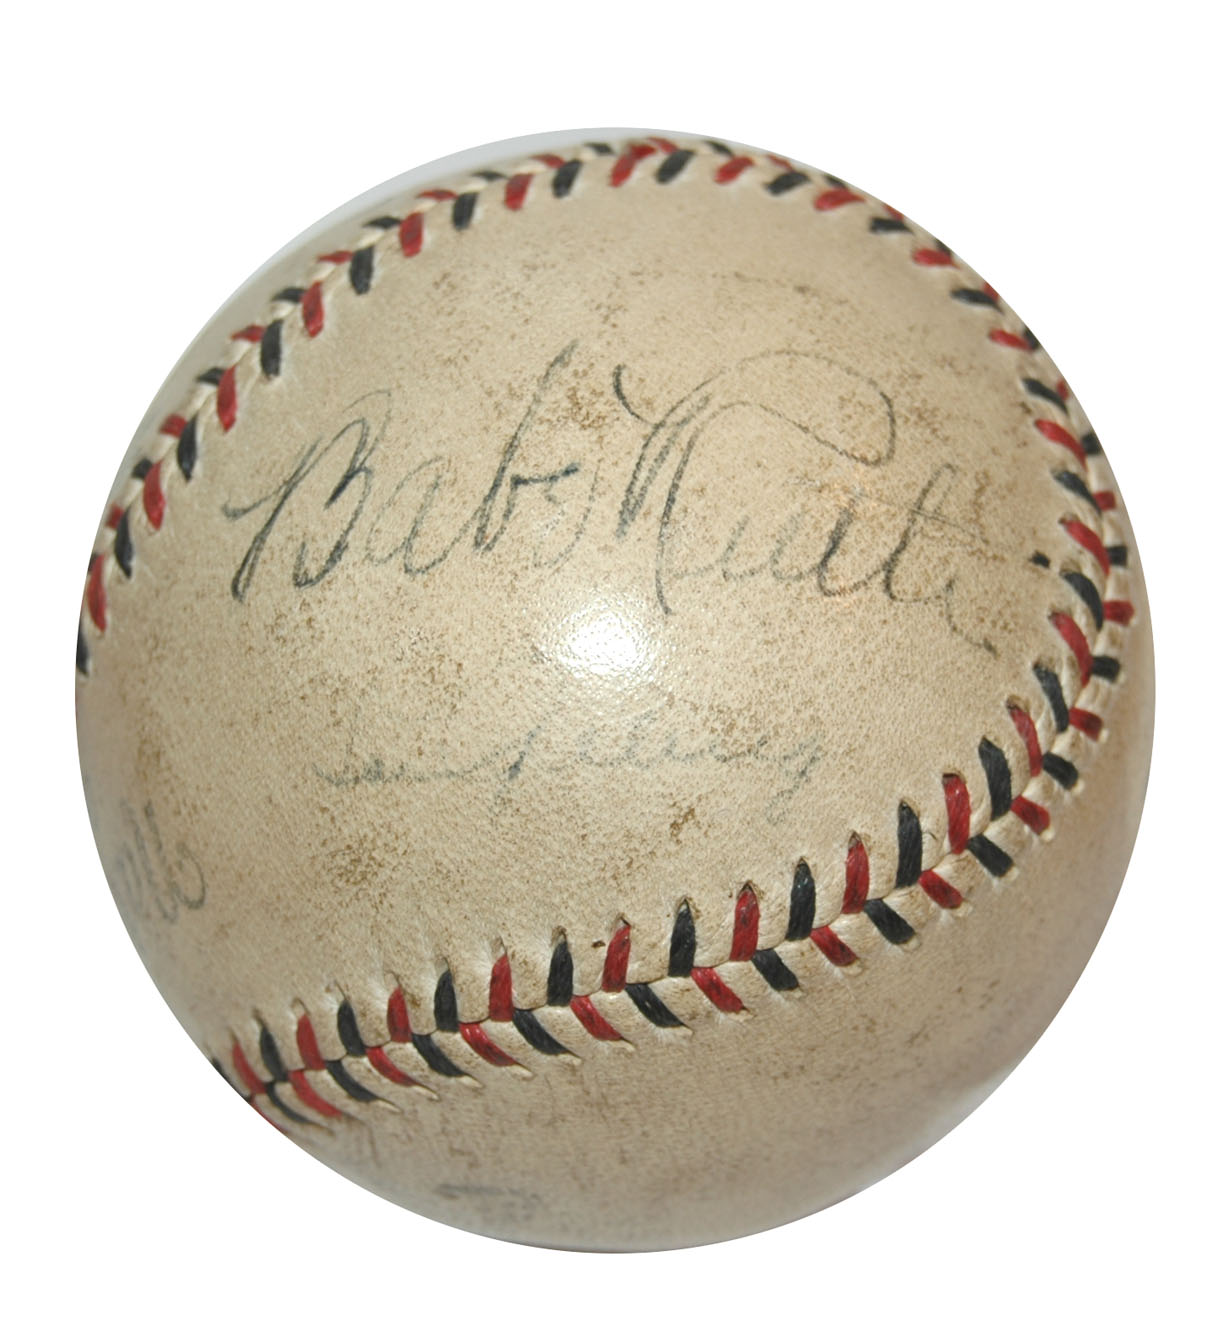 Babe Ruth Autograph